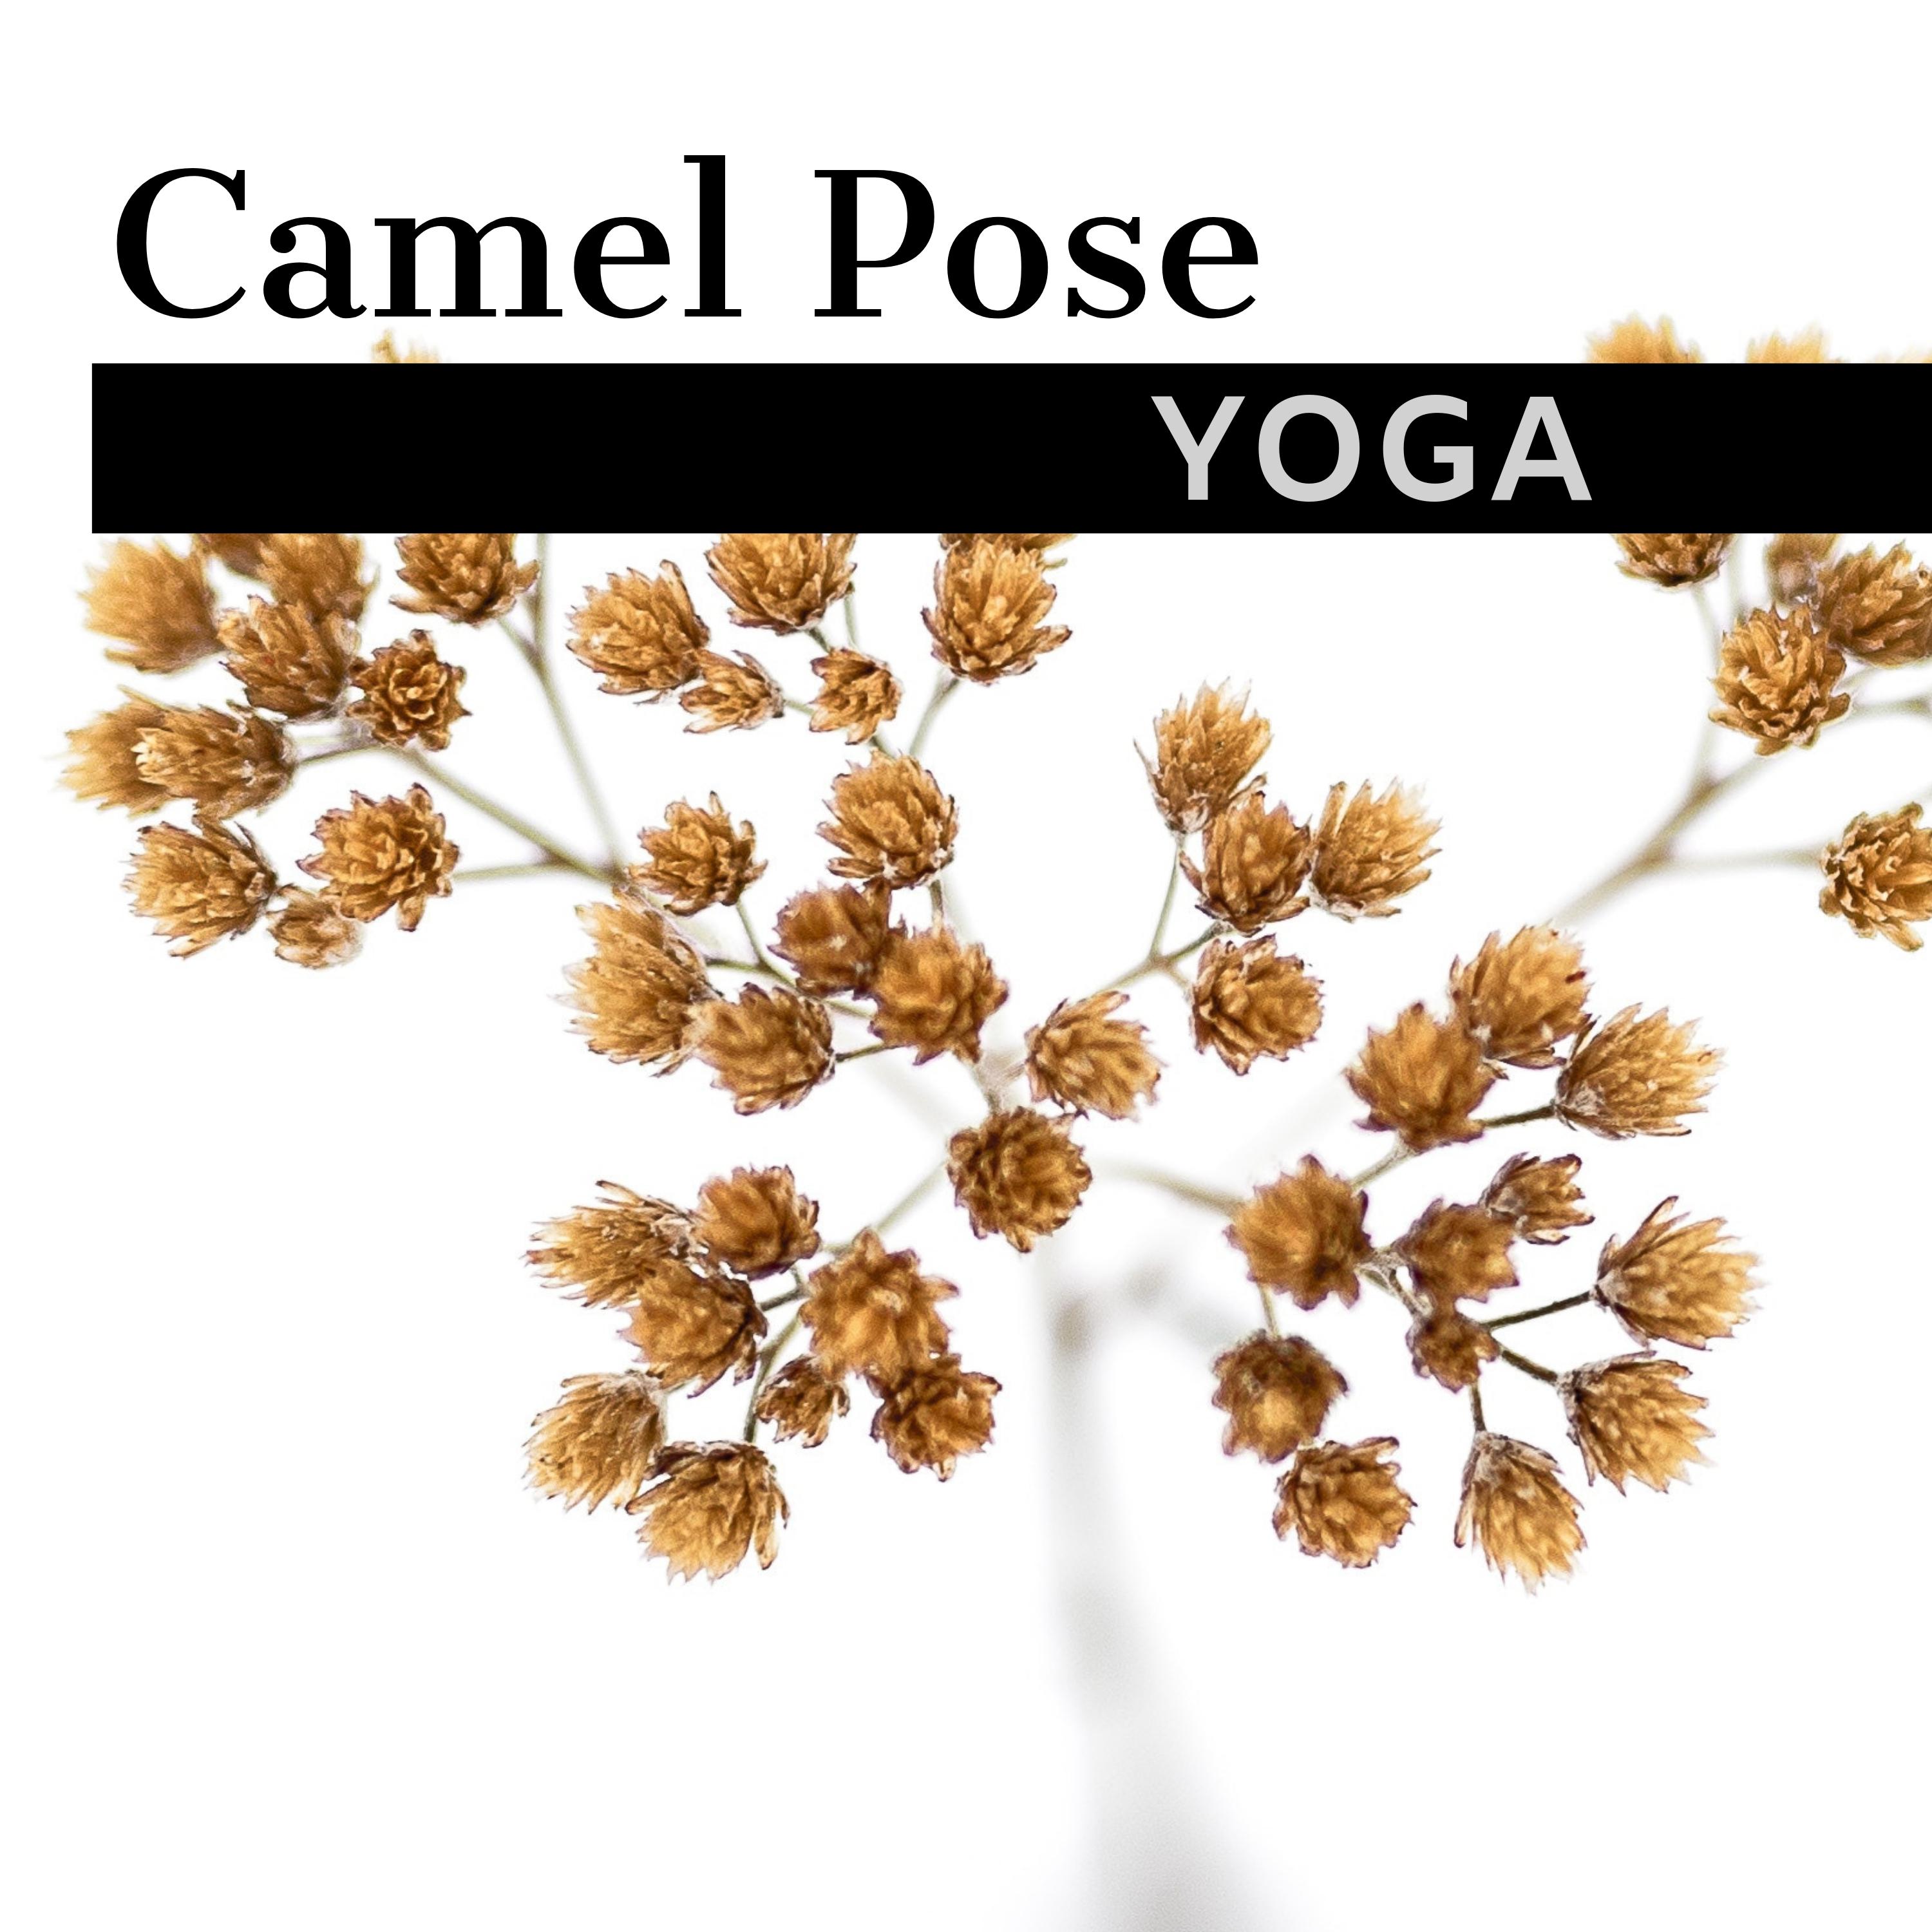 Camel Pose Yoga